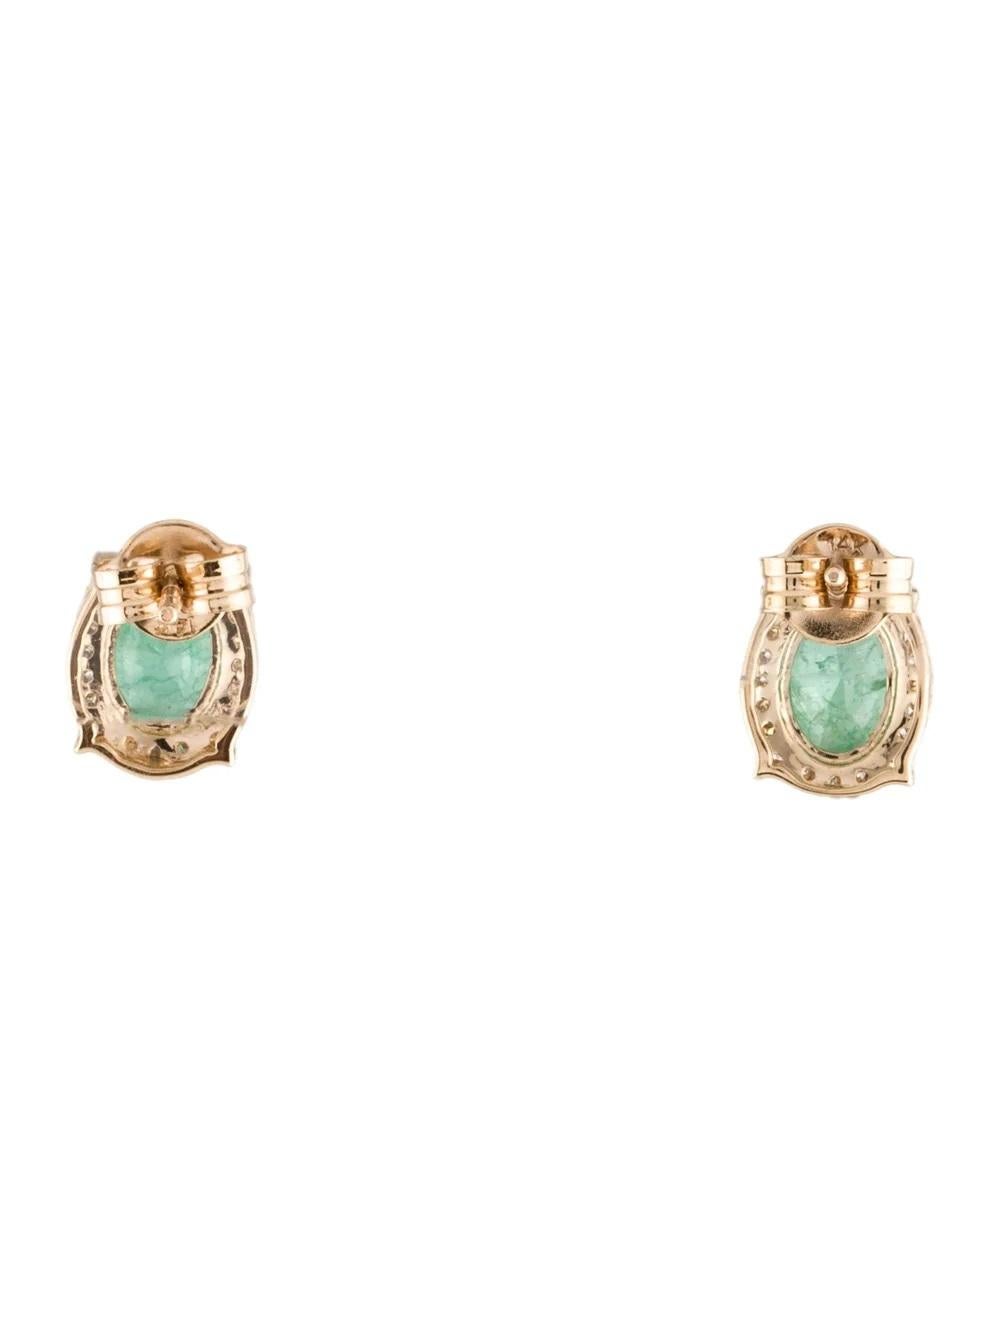 Oval Cut 14K Emerald & Diamond Stud Earrings, 1.32ctw - Classic Design, Timeless Elegance For Sale